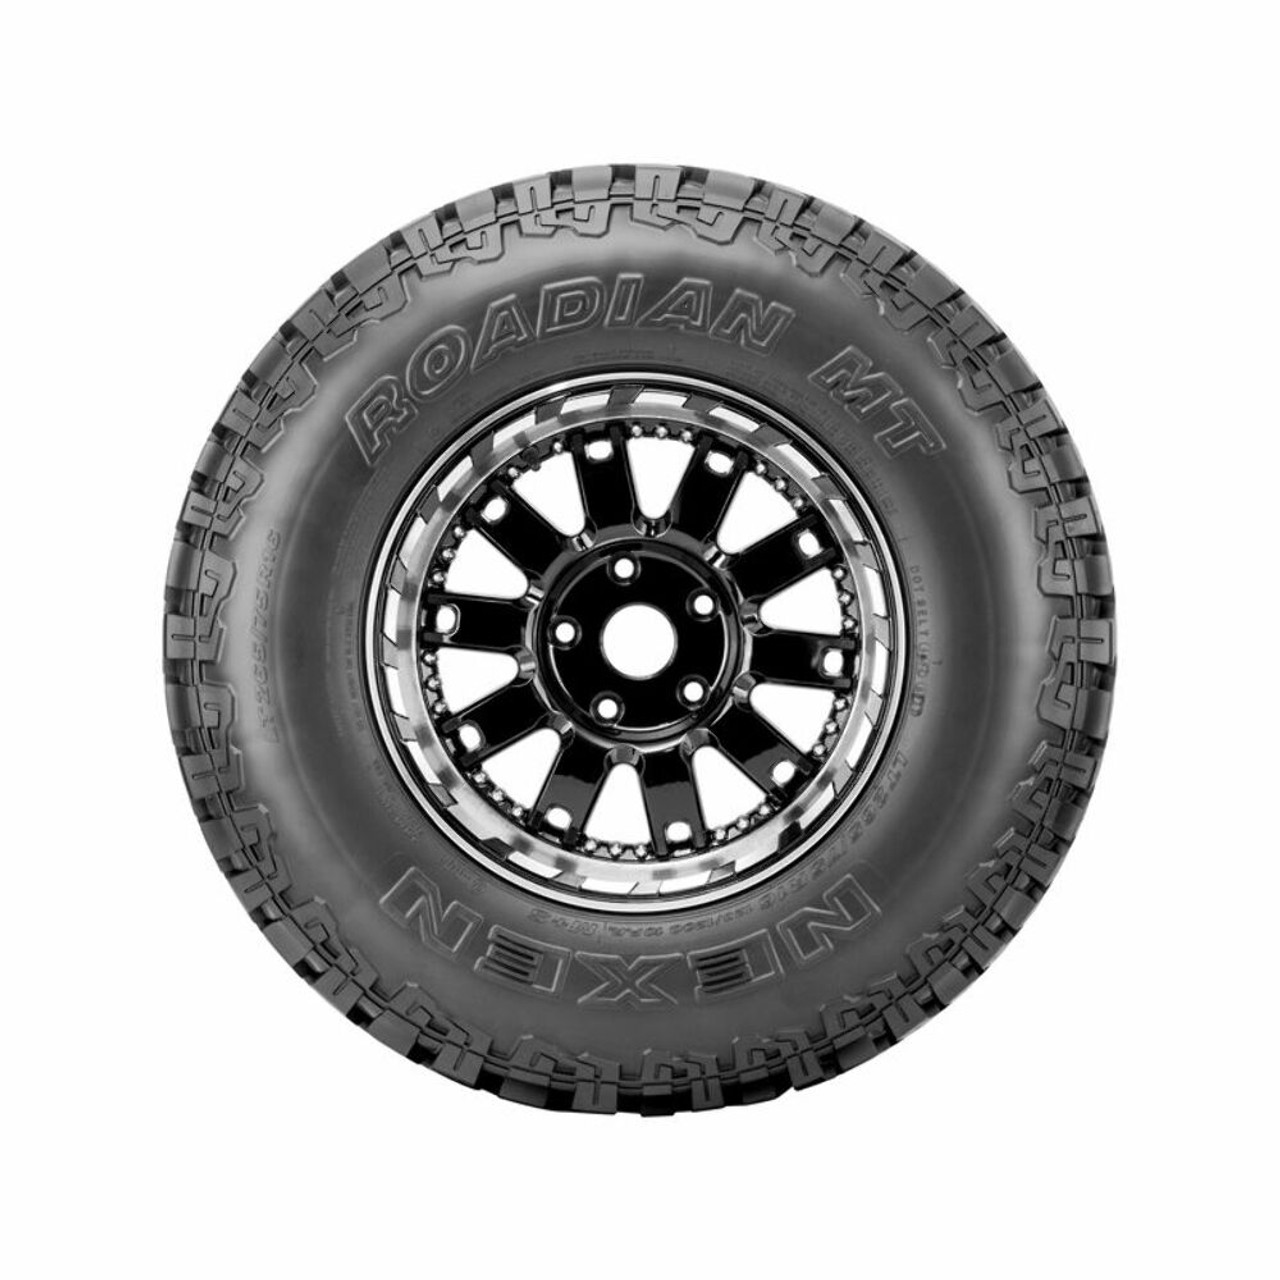 lt31x10.50R15/6 Nexen Roadian MT 109Q Tire 10.503115 Mud Terrain